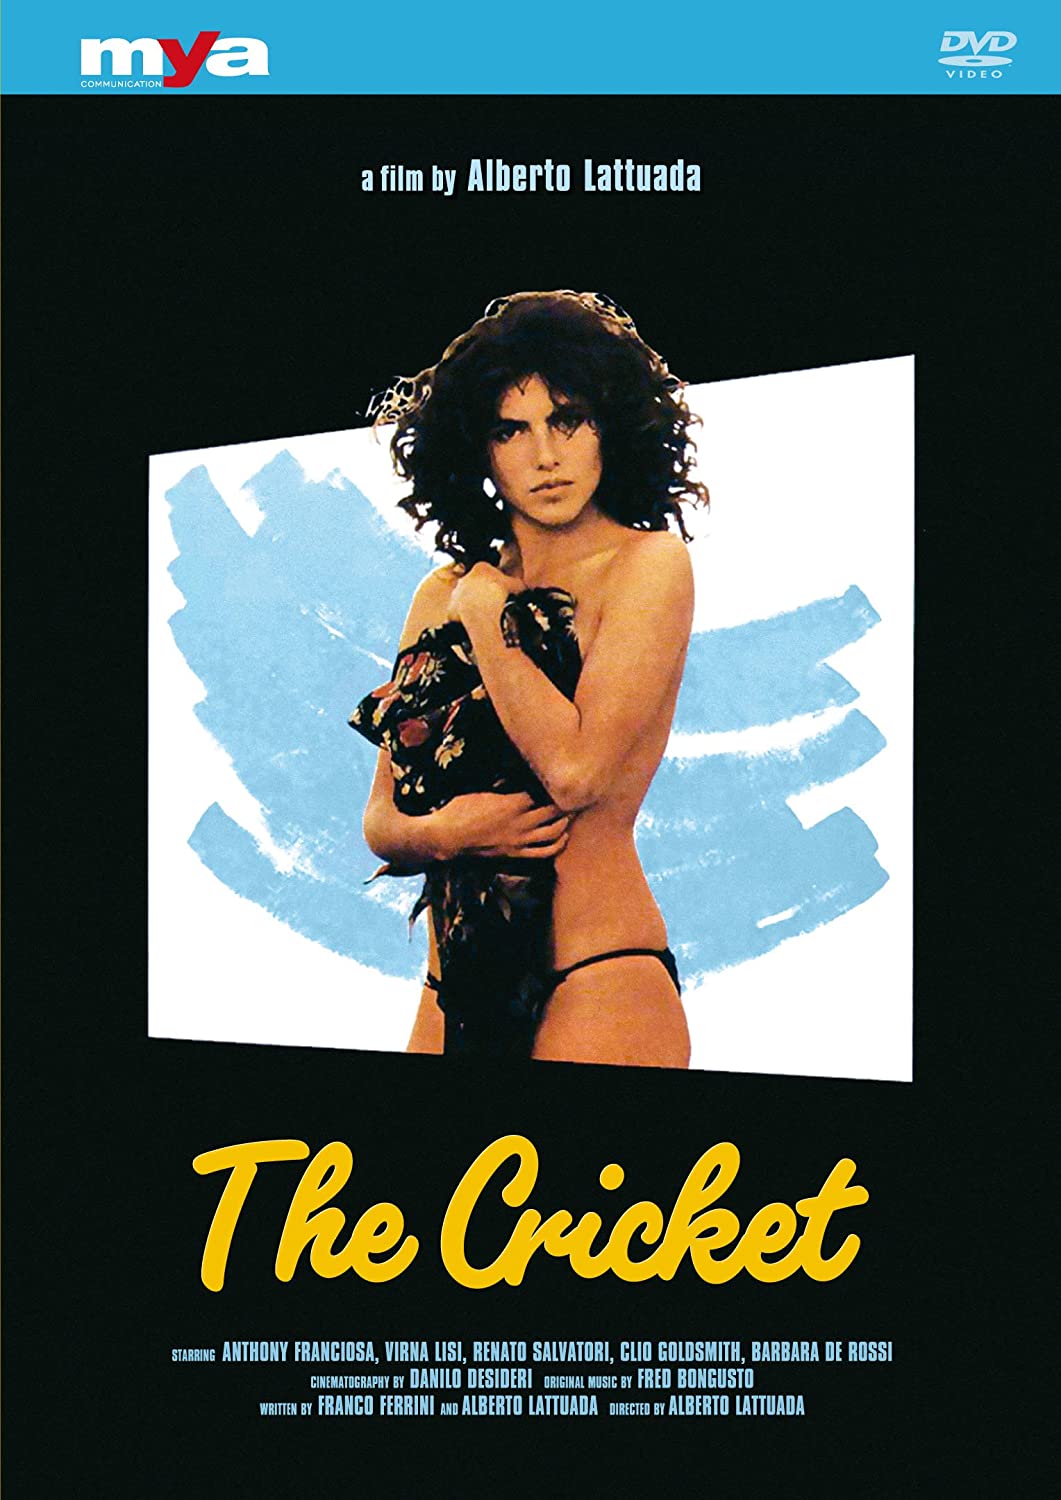 THE CRICKET DVD